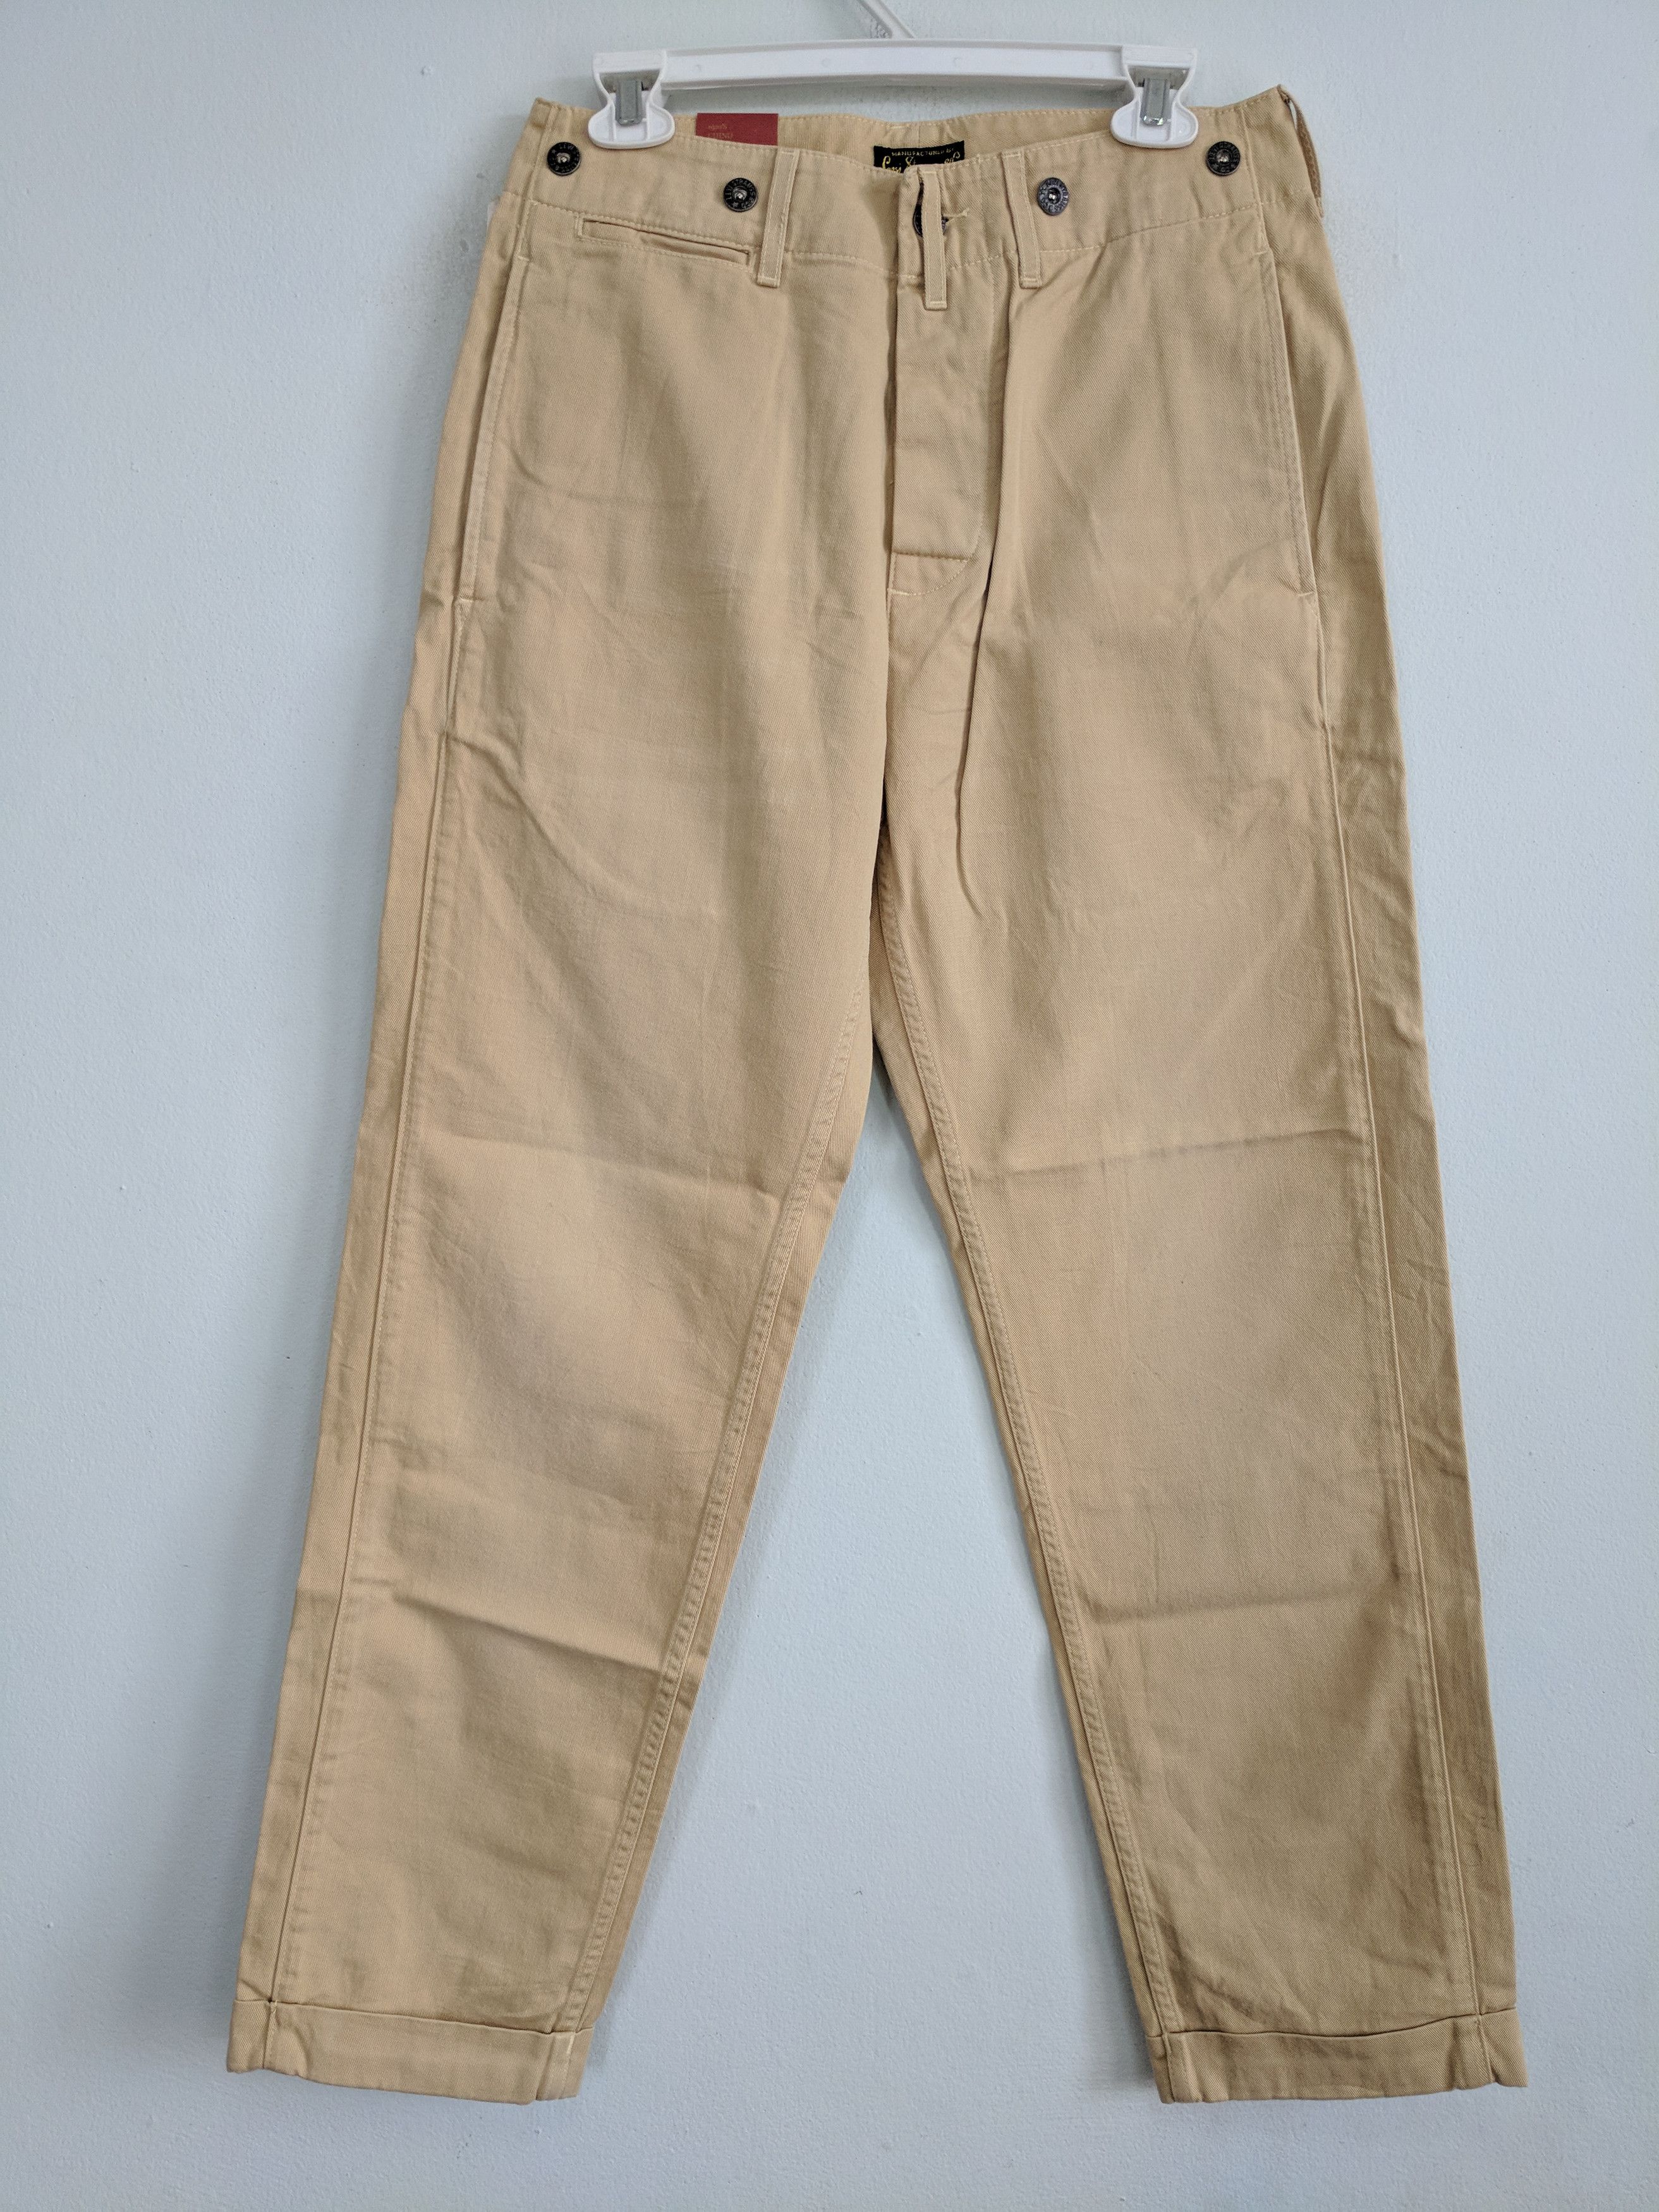 Levi's Levis LVC vintage clothing San Francisco deadstock khakis chino 1920s style pants size 29 30 Size US 29 - 2 Preview